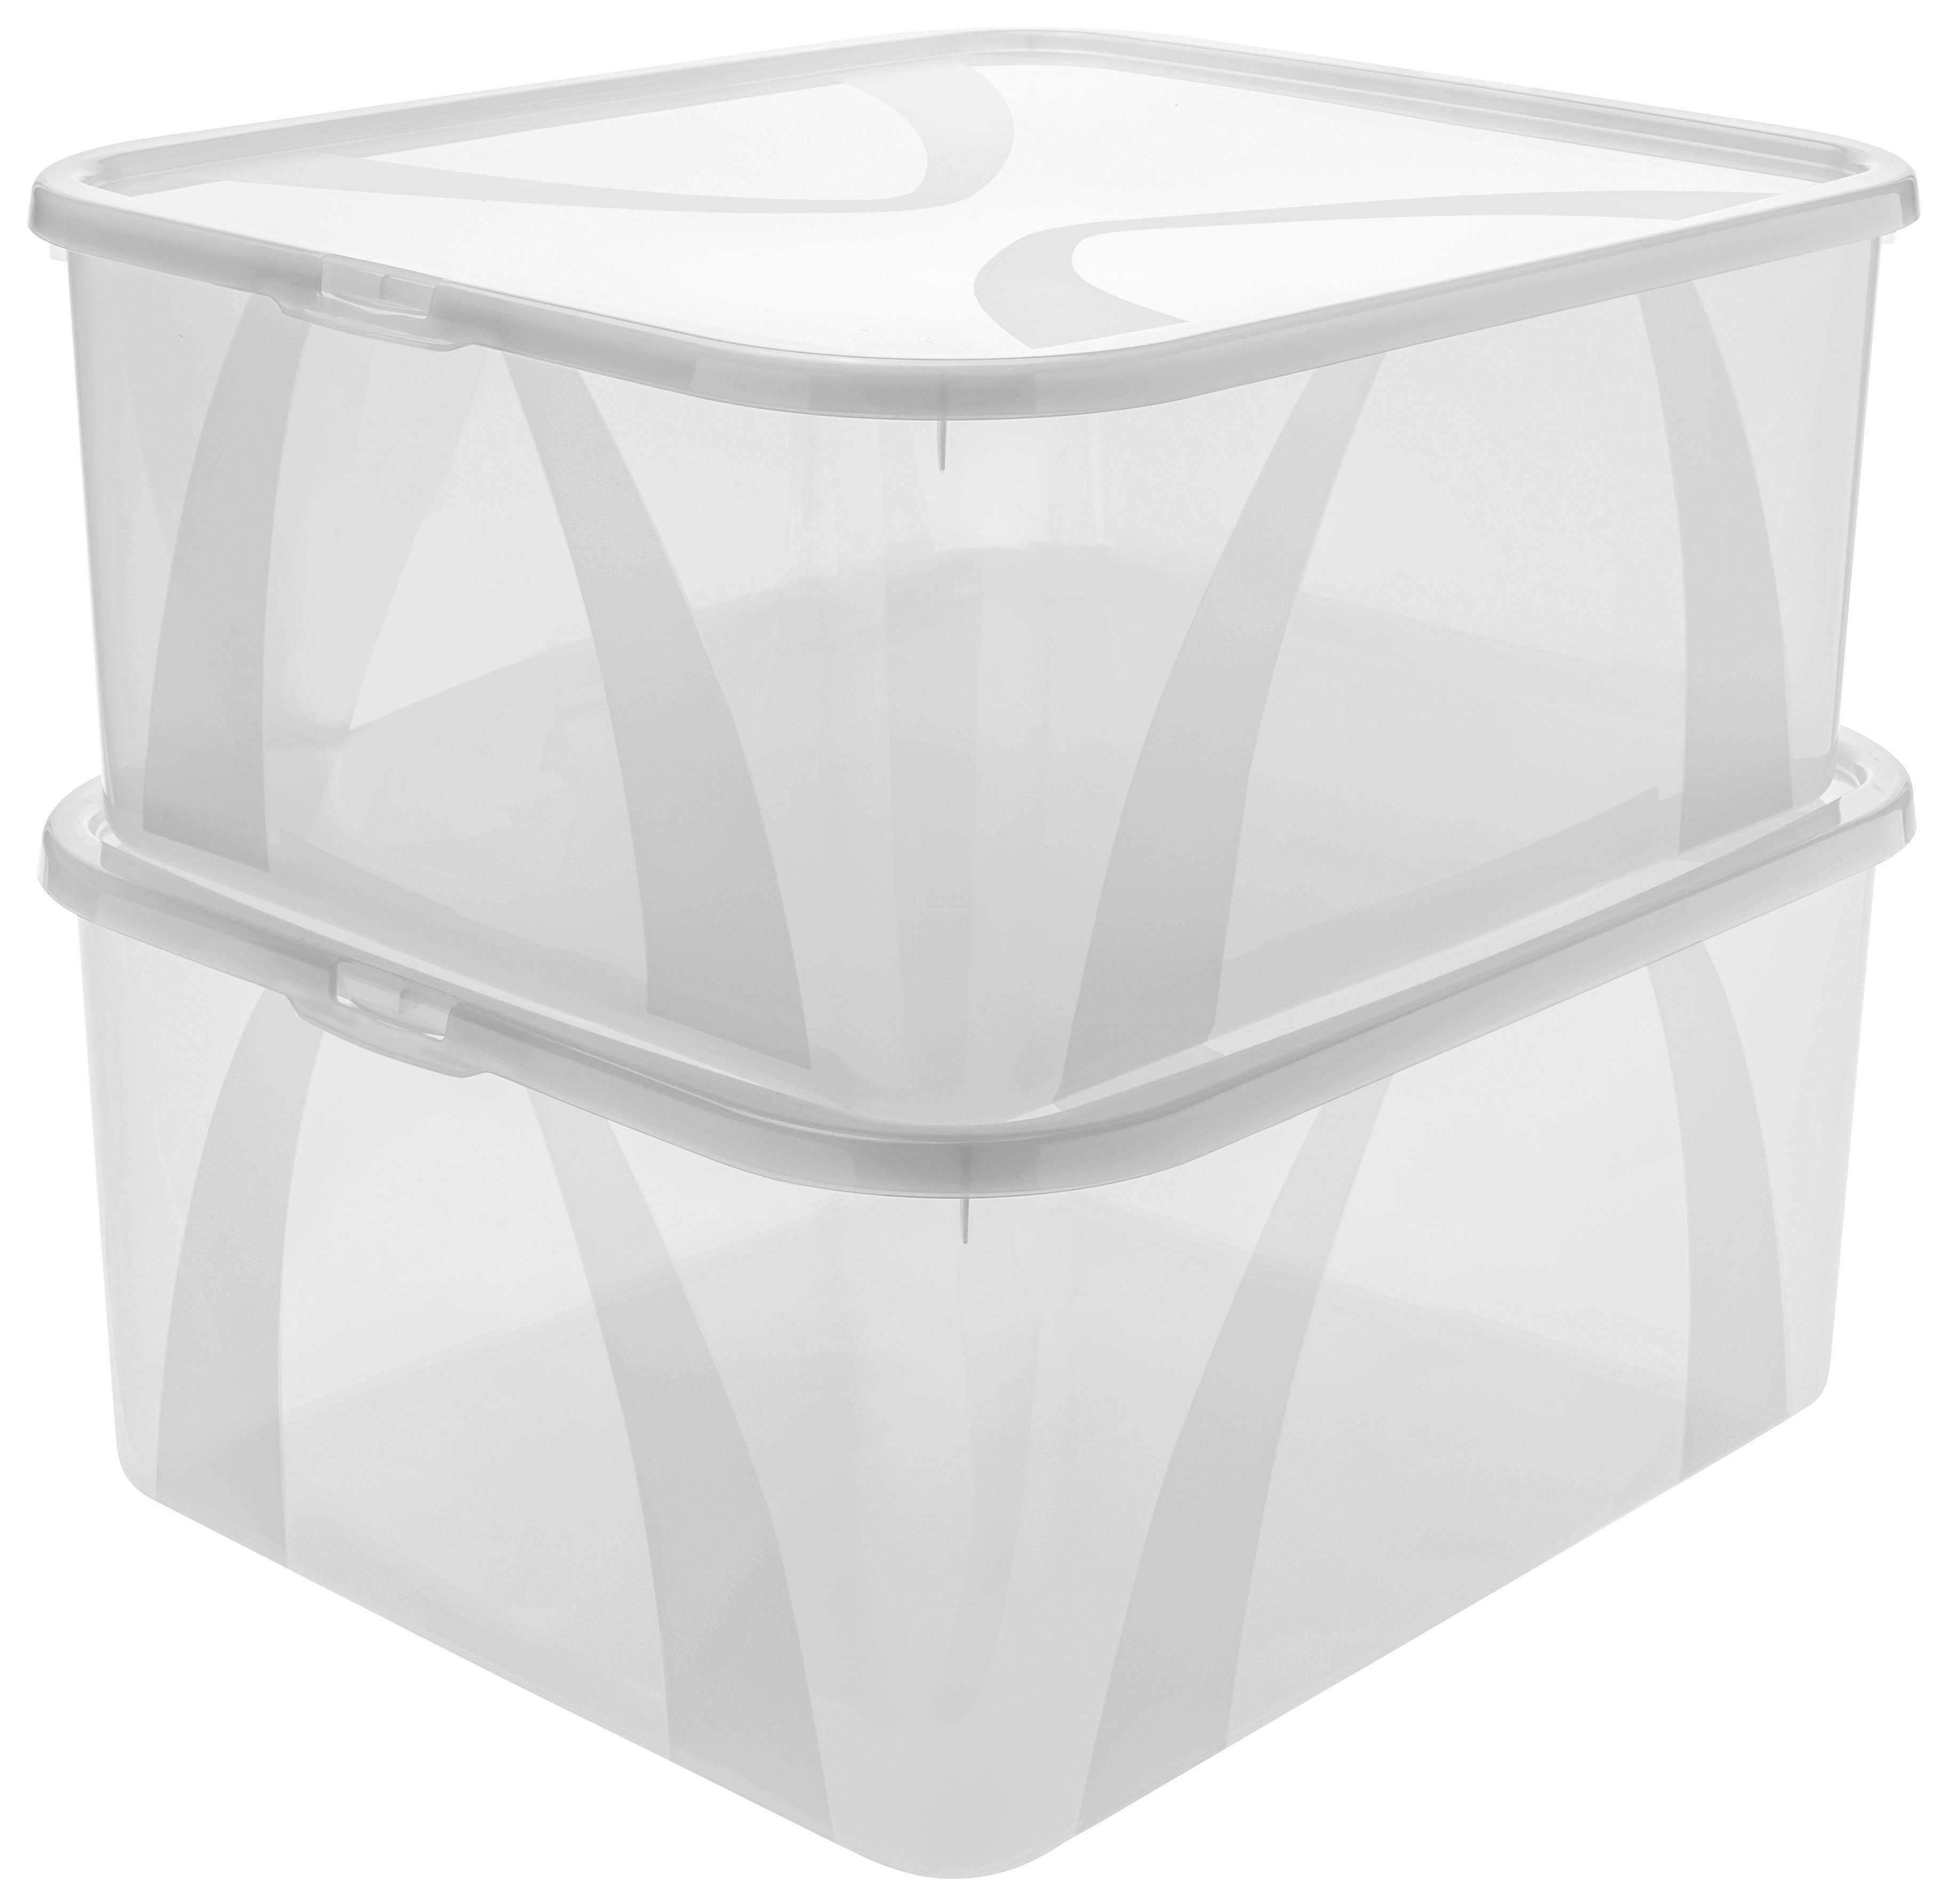 AUFBEWAHRUNGSBOXEN-SET - Transparent, Basics, Kunststoff (42/35/17cm) - Rotho